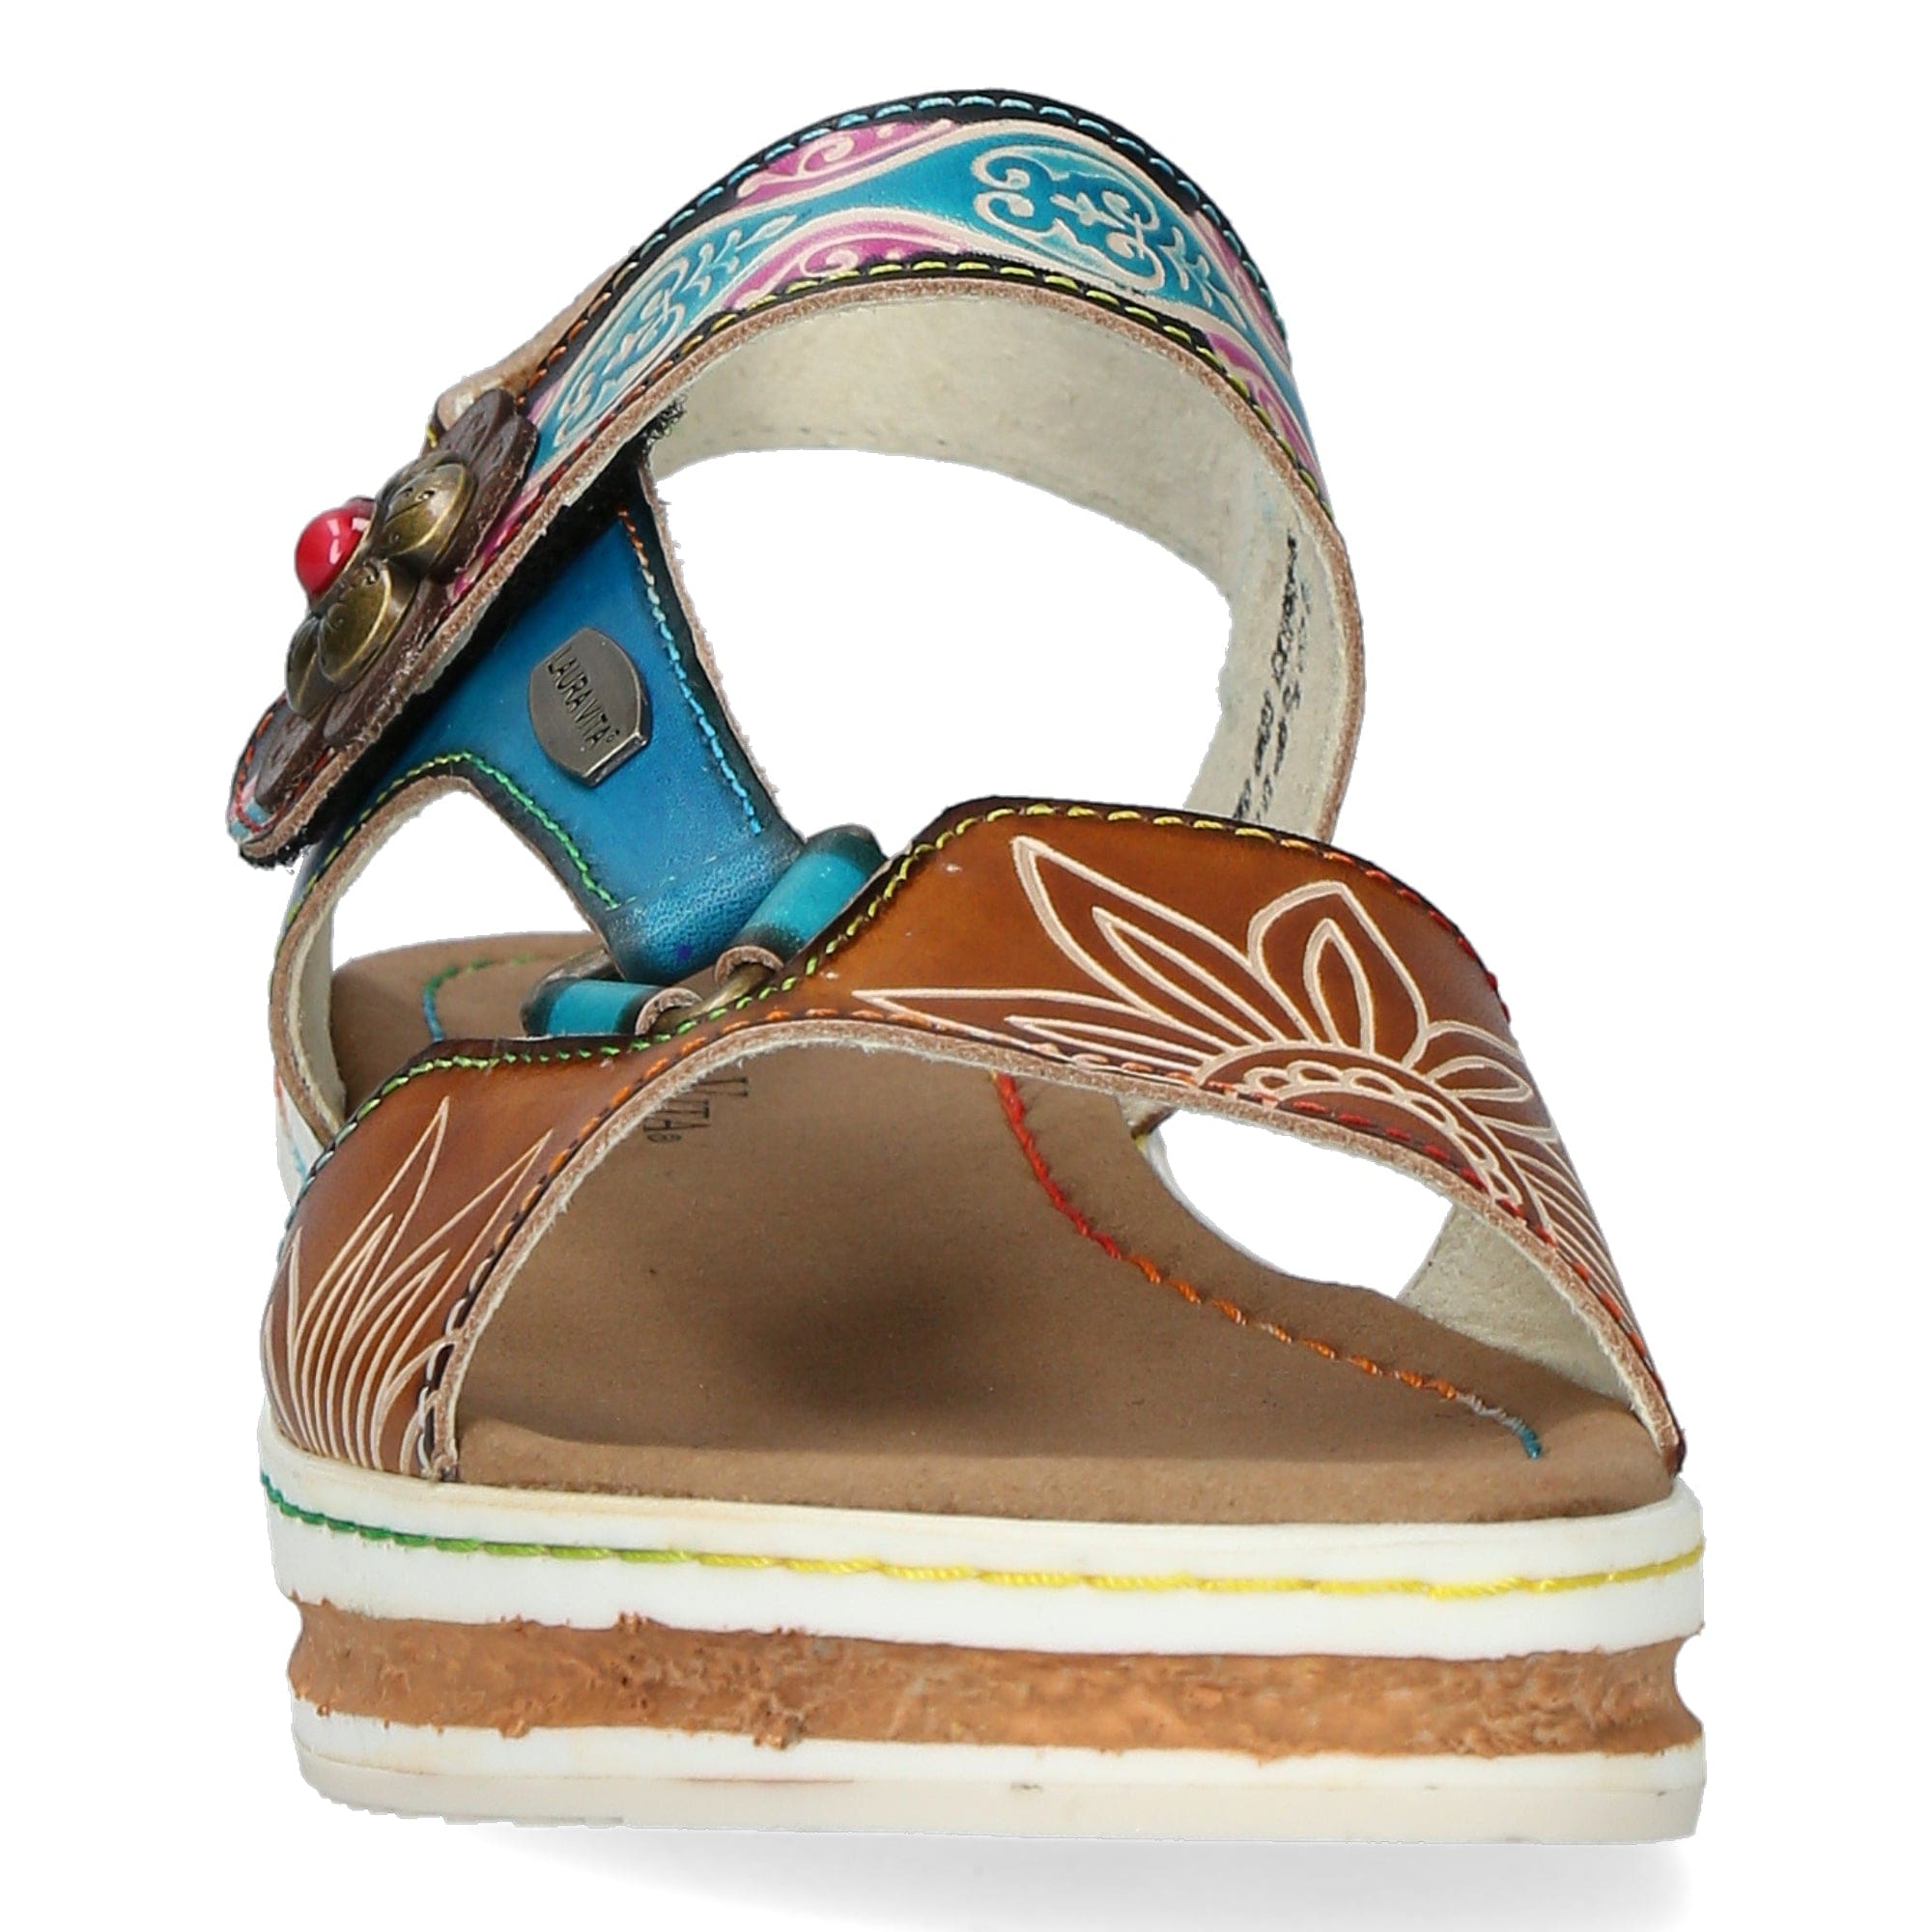 Shoe DICEZEO 0623 - Sandal